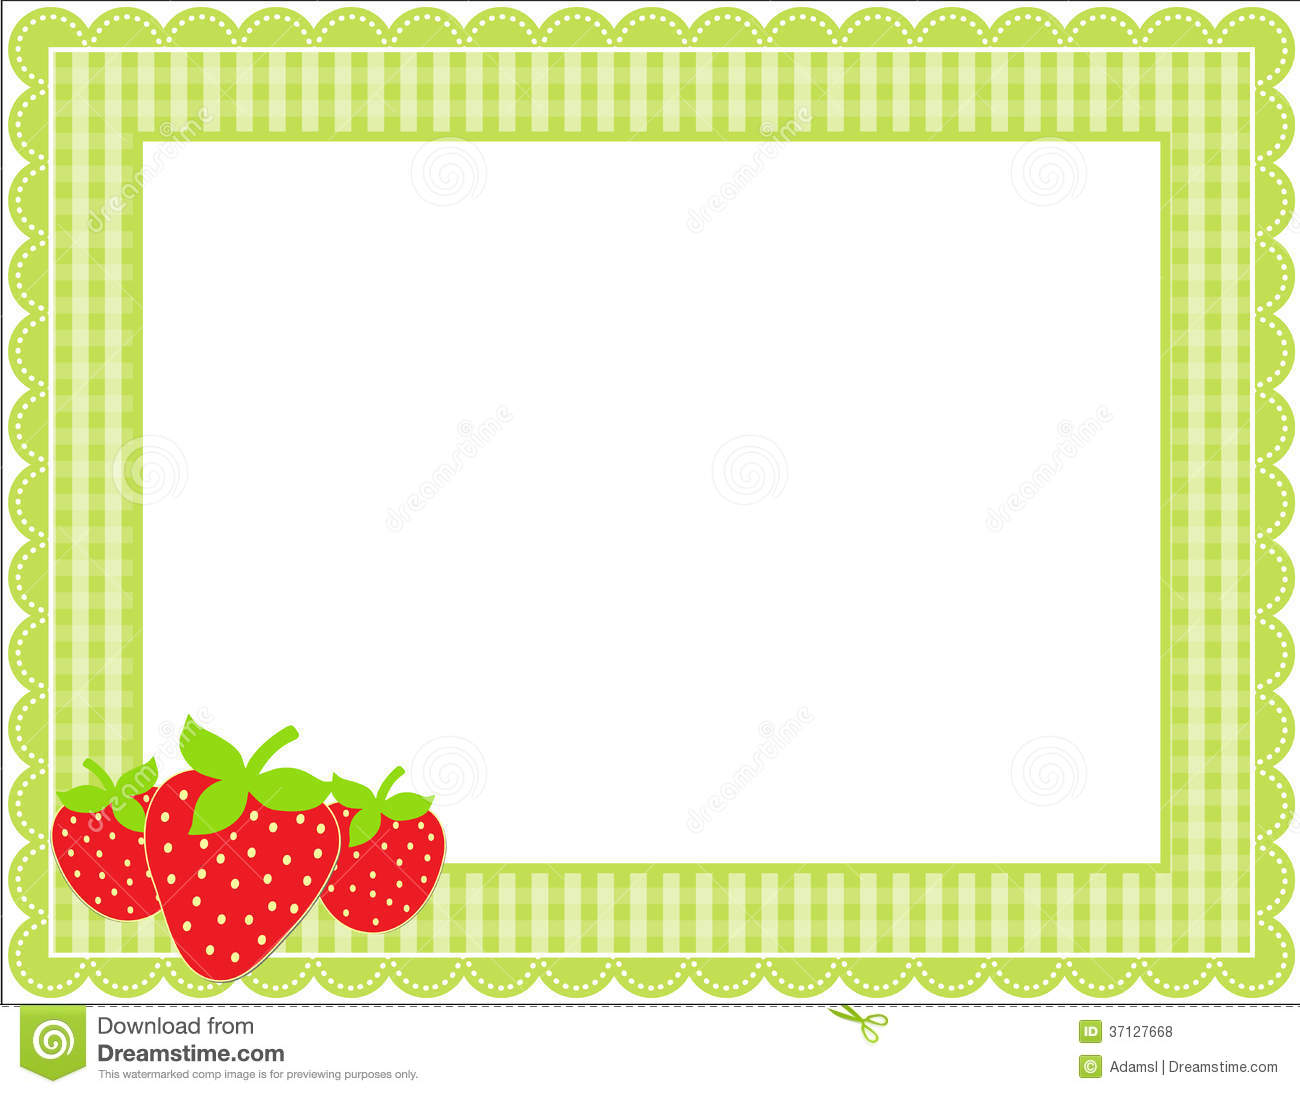 Strawberry Gingham Frame Patterned Scalloped Border Set Strawberries